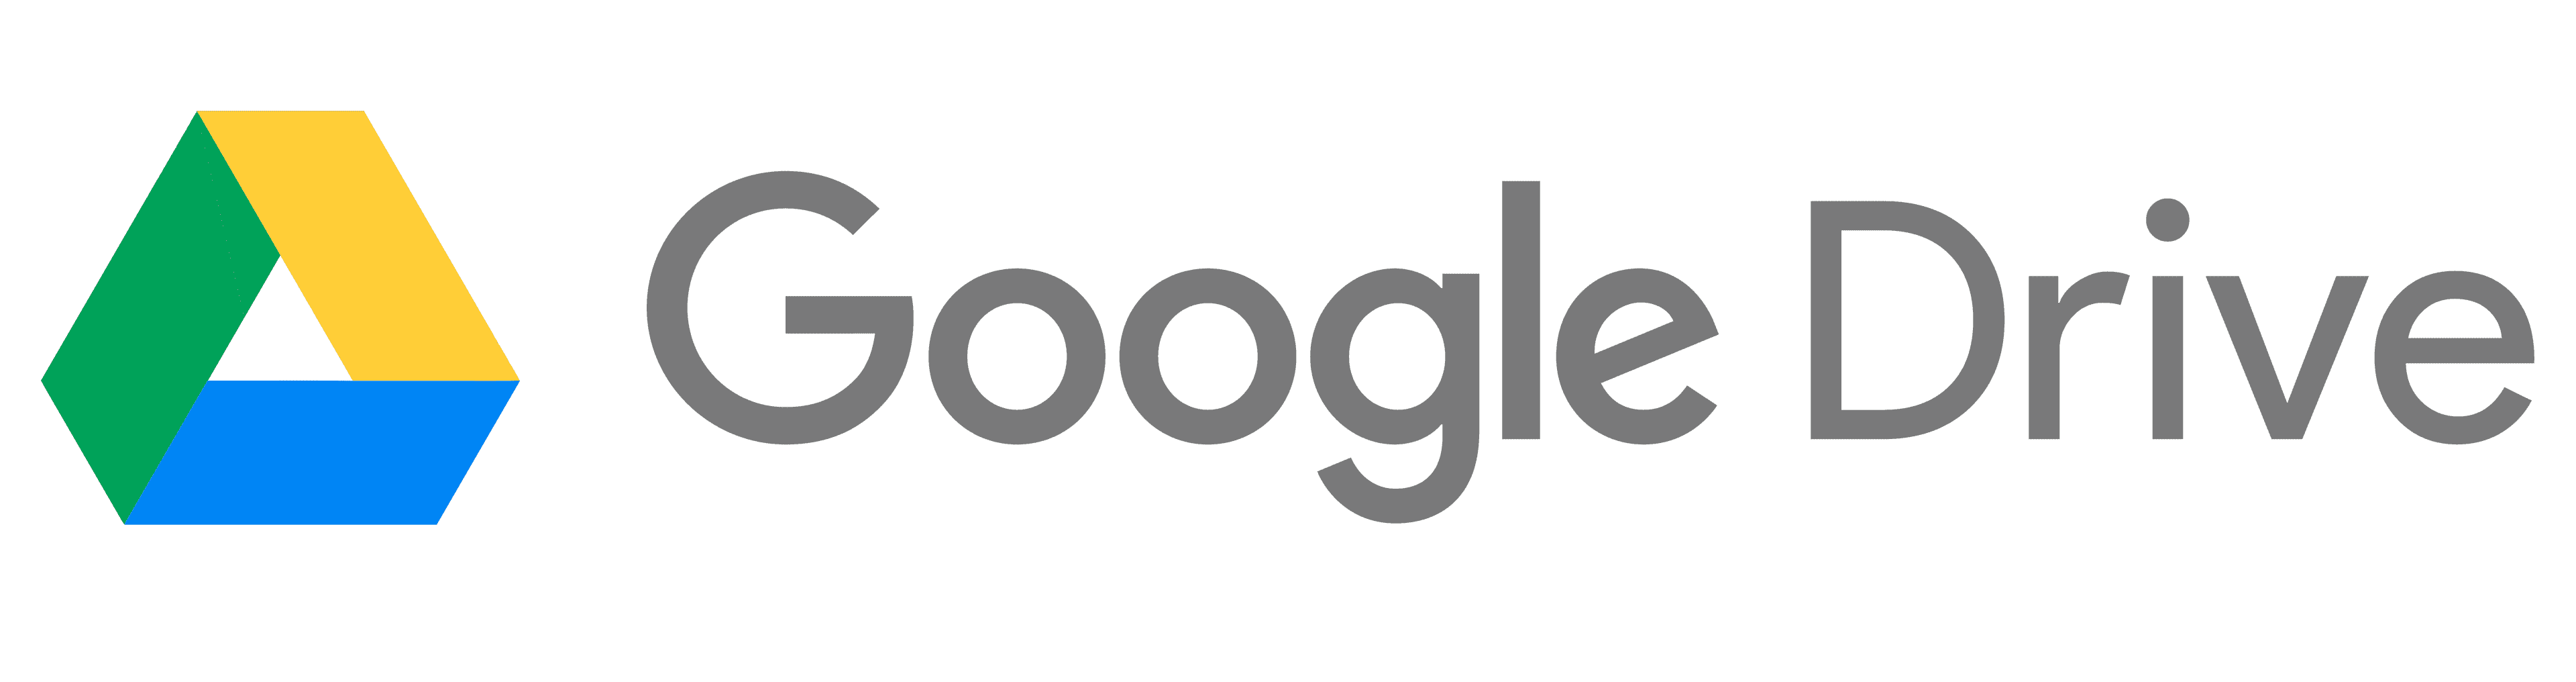 Google-Drive-Emblem 1